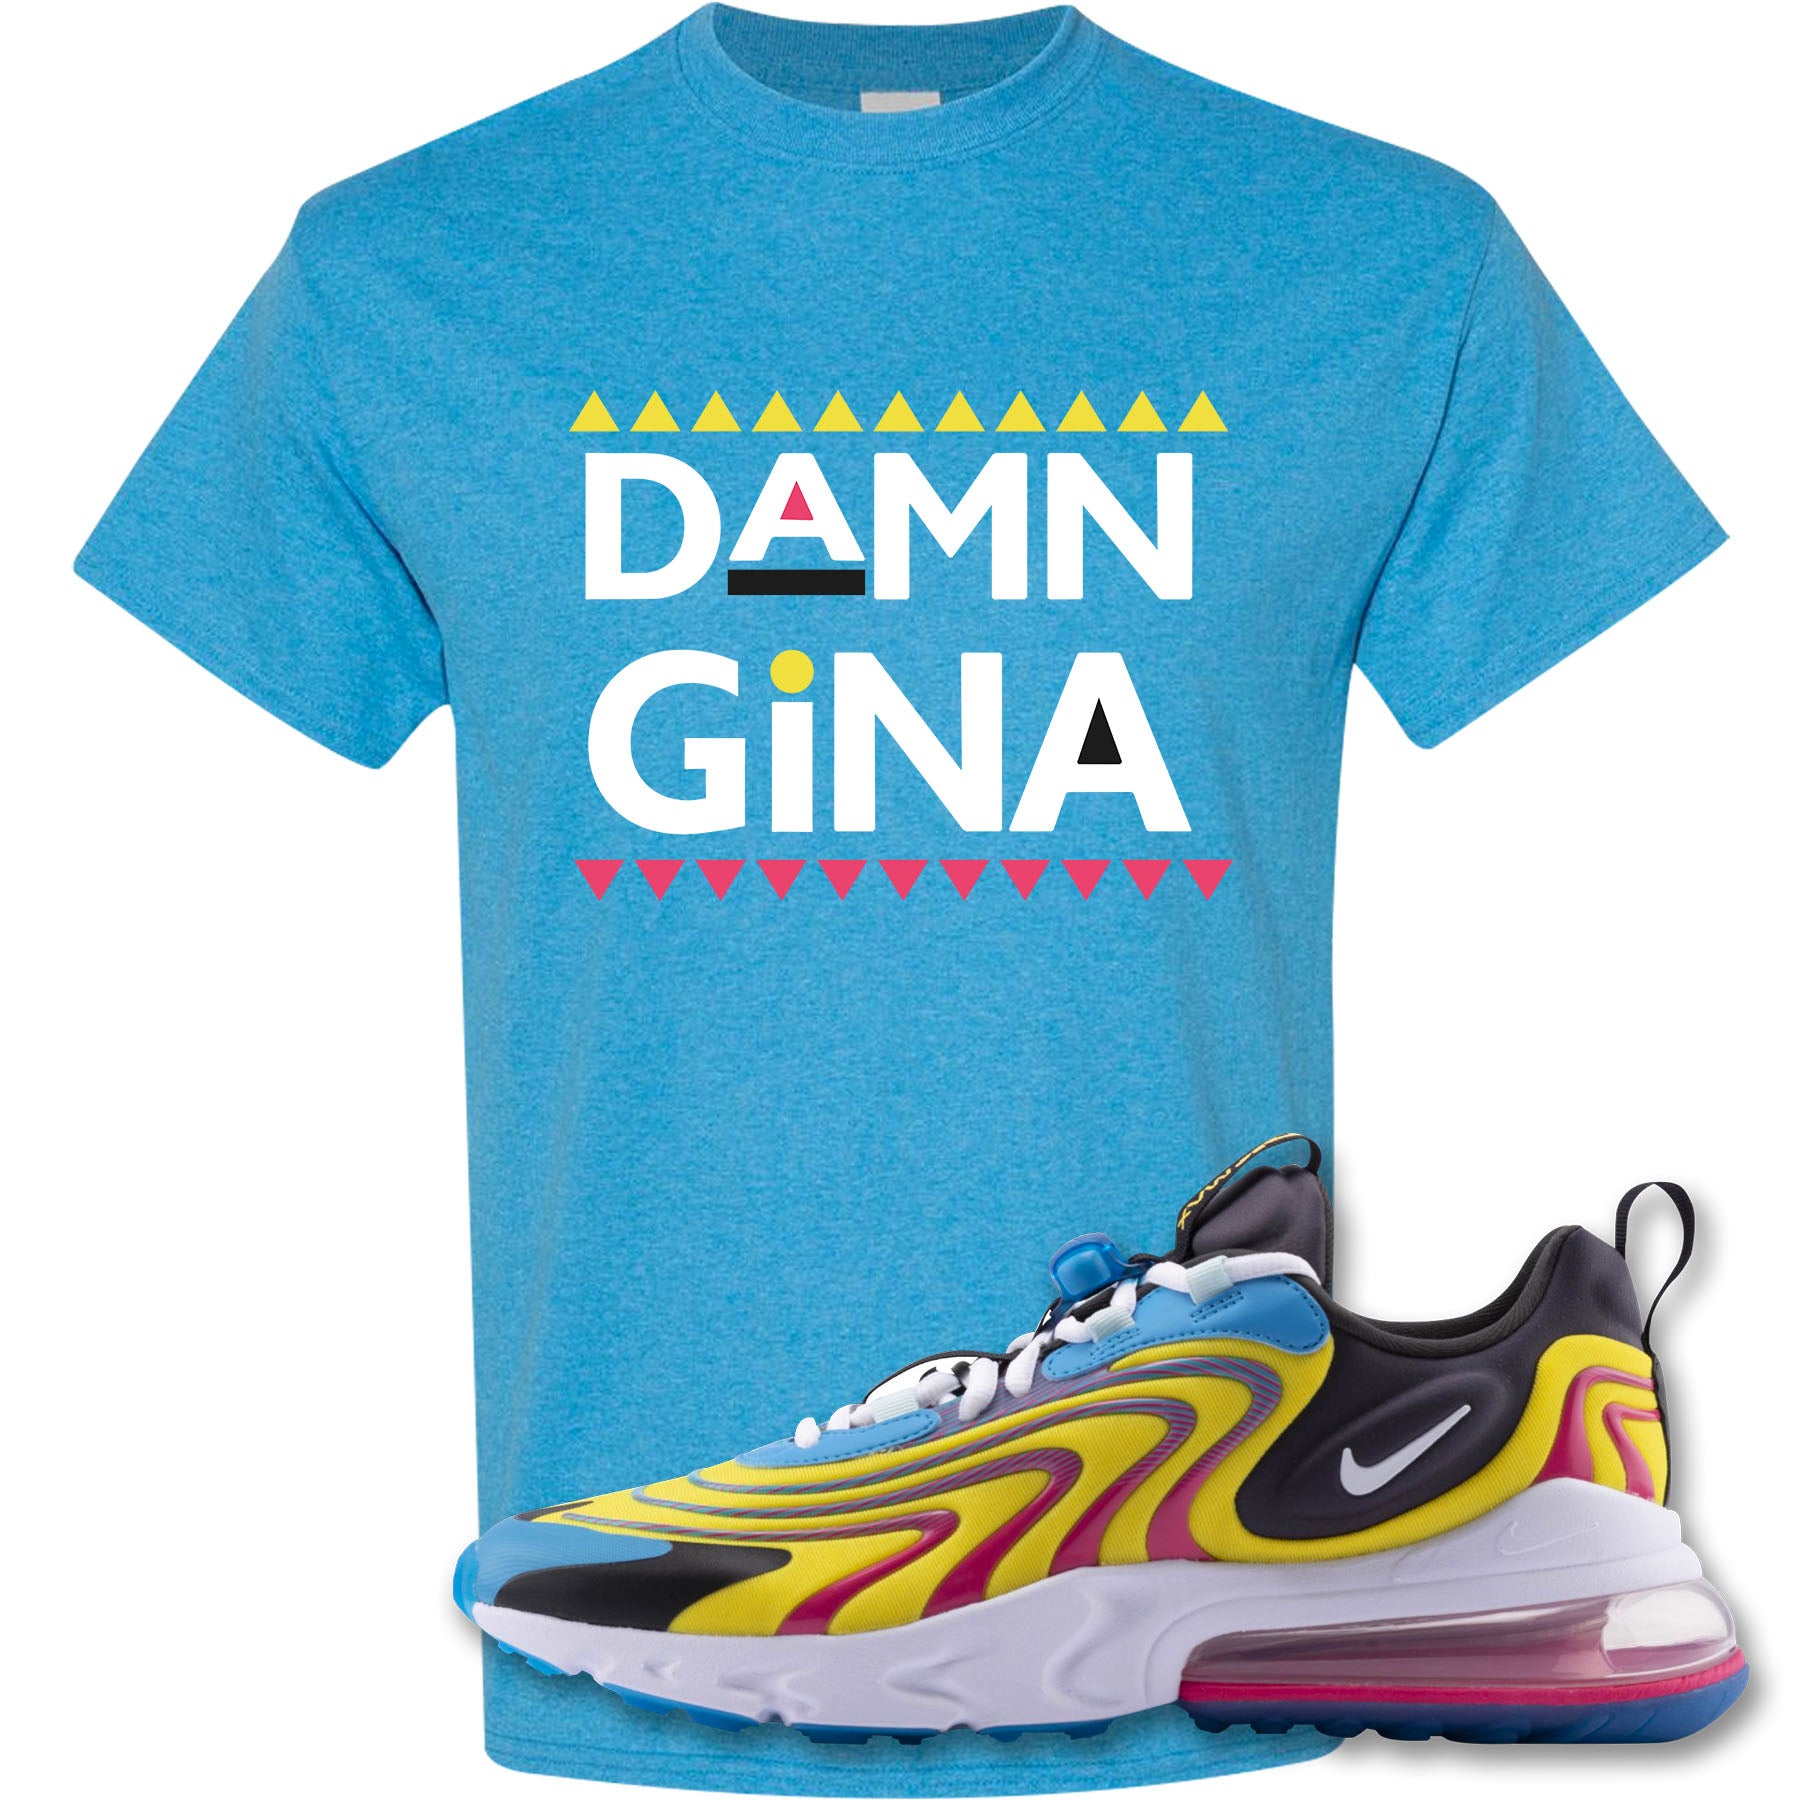 Damn Gina Heather Sapphire T-Shirt to 